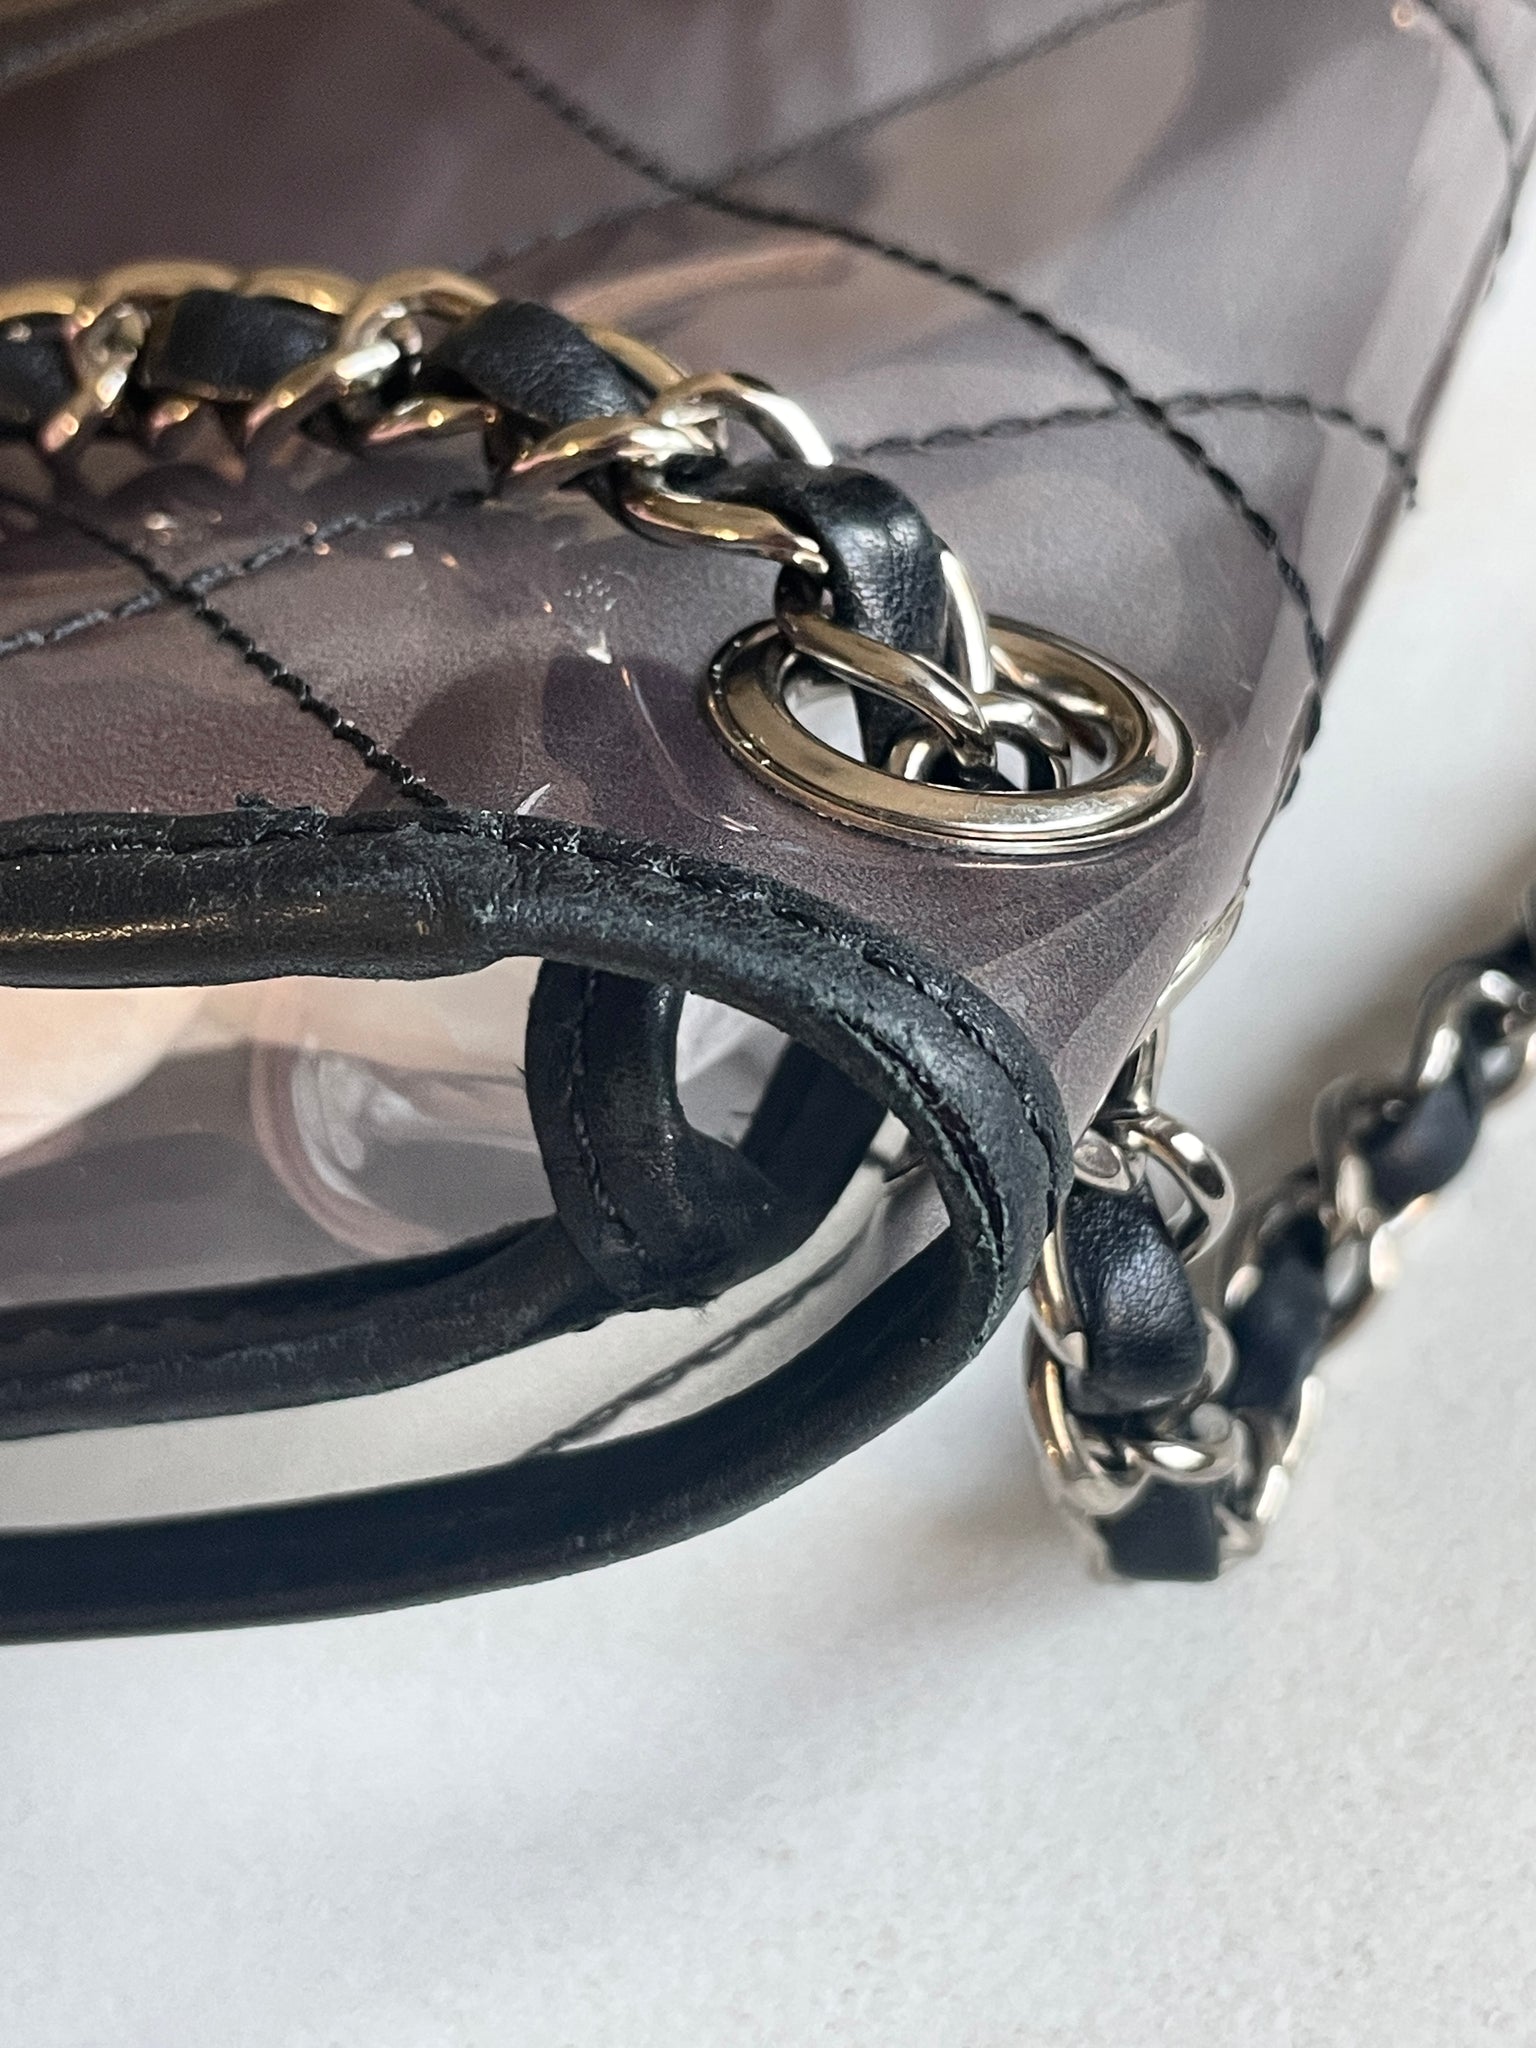 Rare Chanel Ombre Transparent Flap Bag